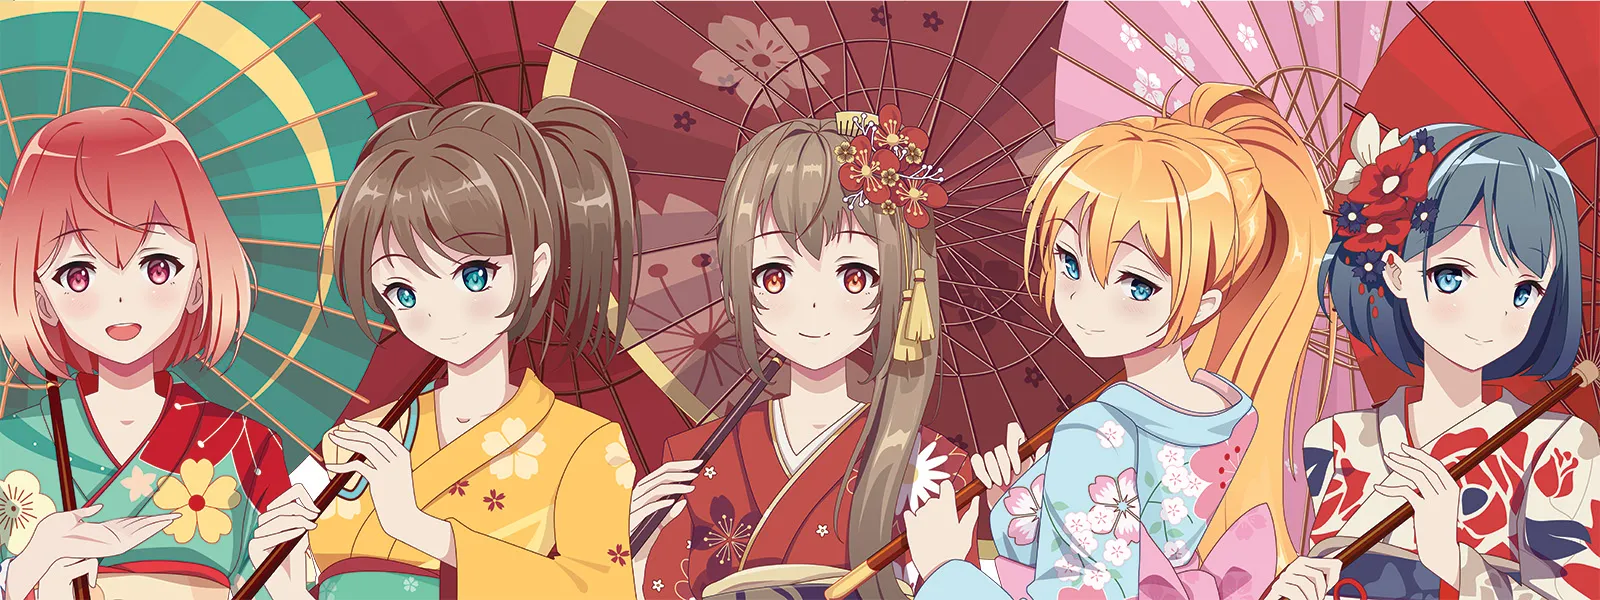 Anime girls holding umbrellas